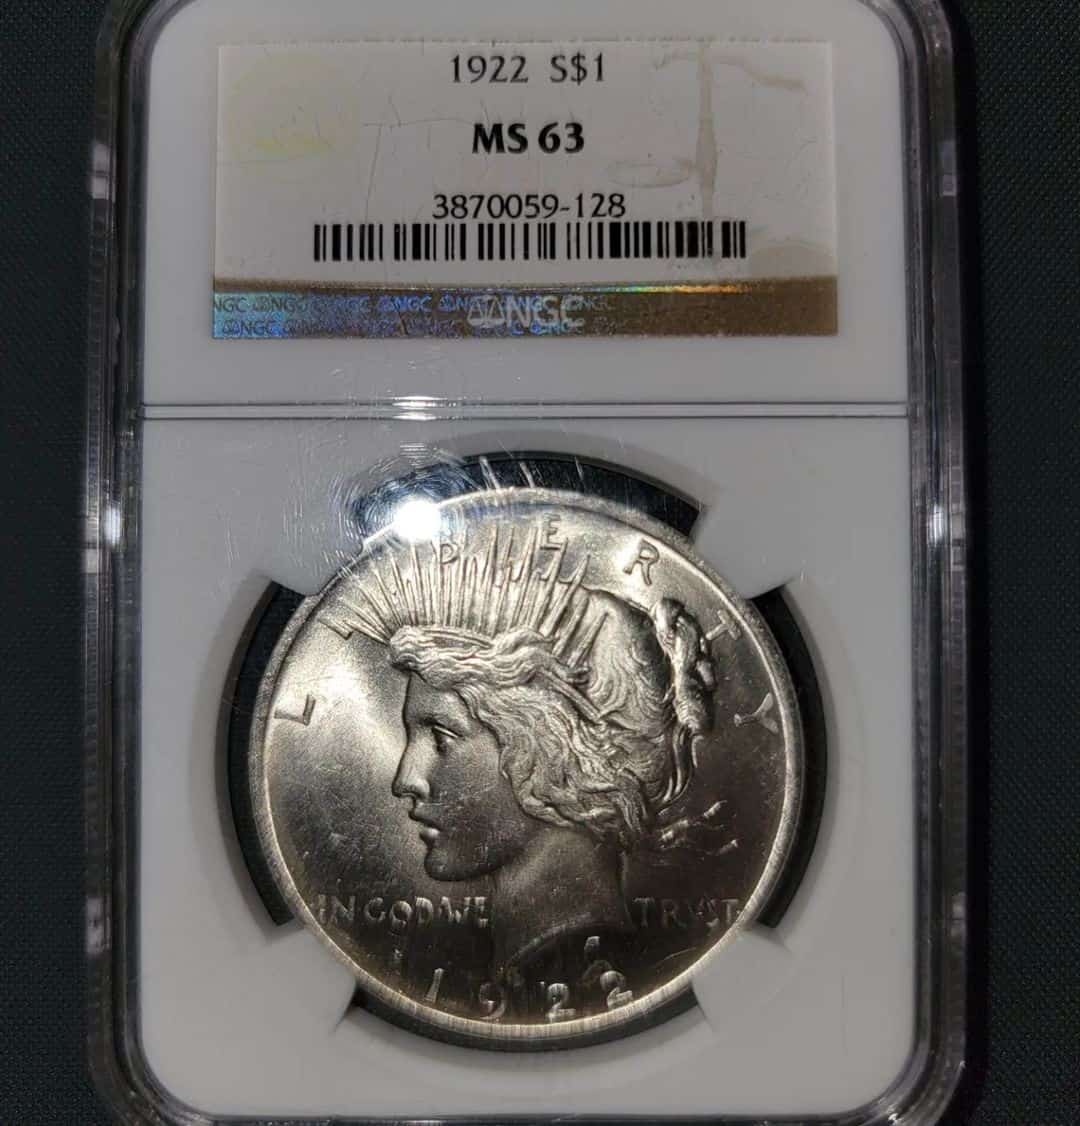 ‘Liberty’ 1922 Silver Dollar Value